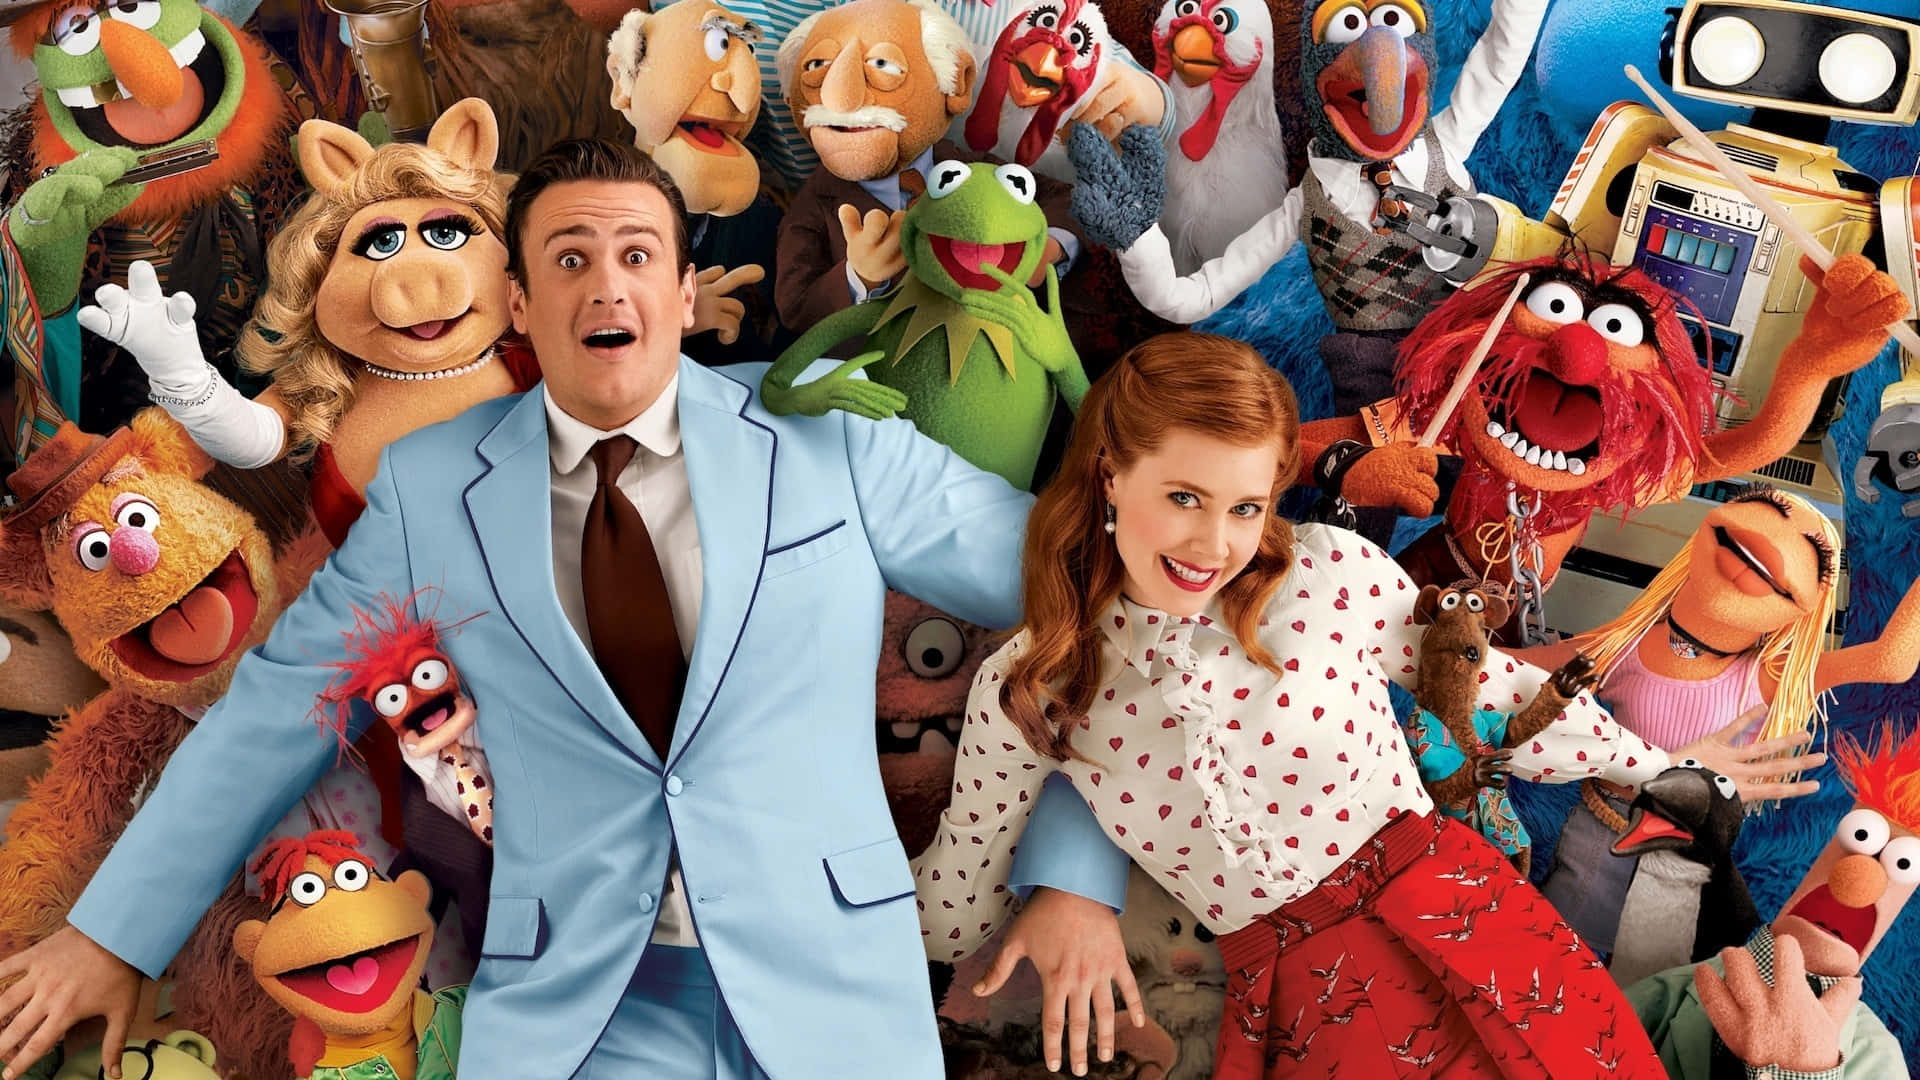 Muppets Cast Group Photo Wallpaper